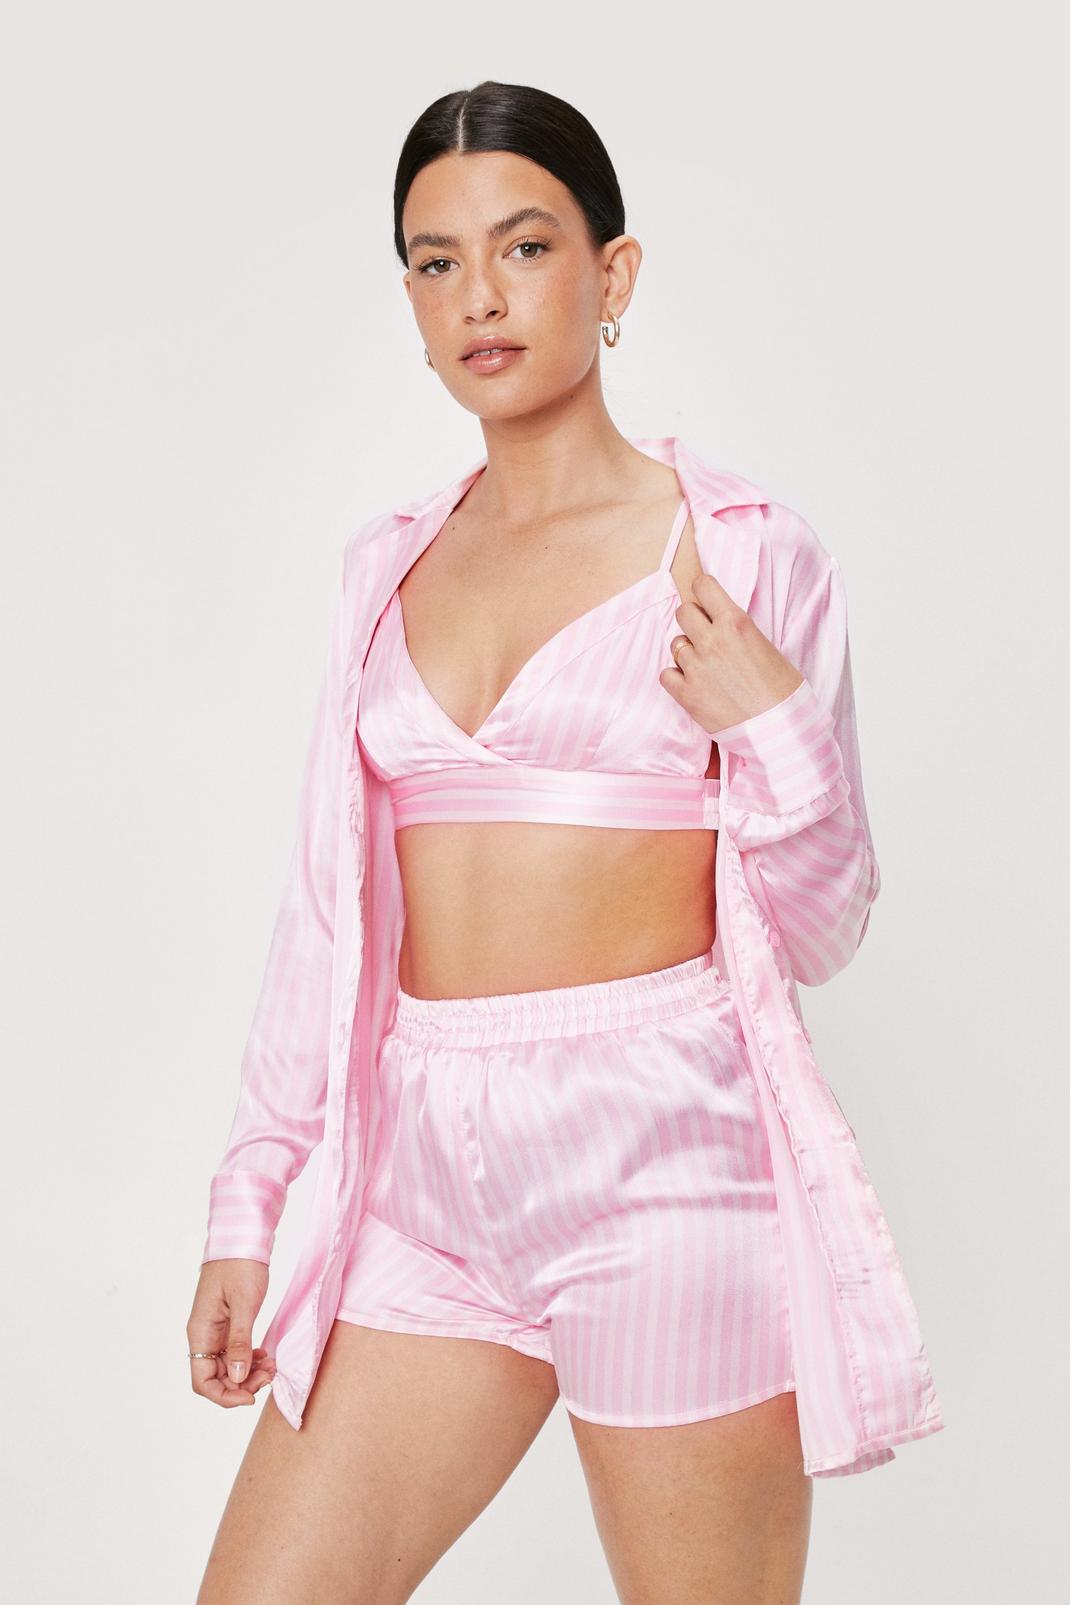 Petite Satin 3pc Pajama Shirt Shorts and Bralette Set